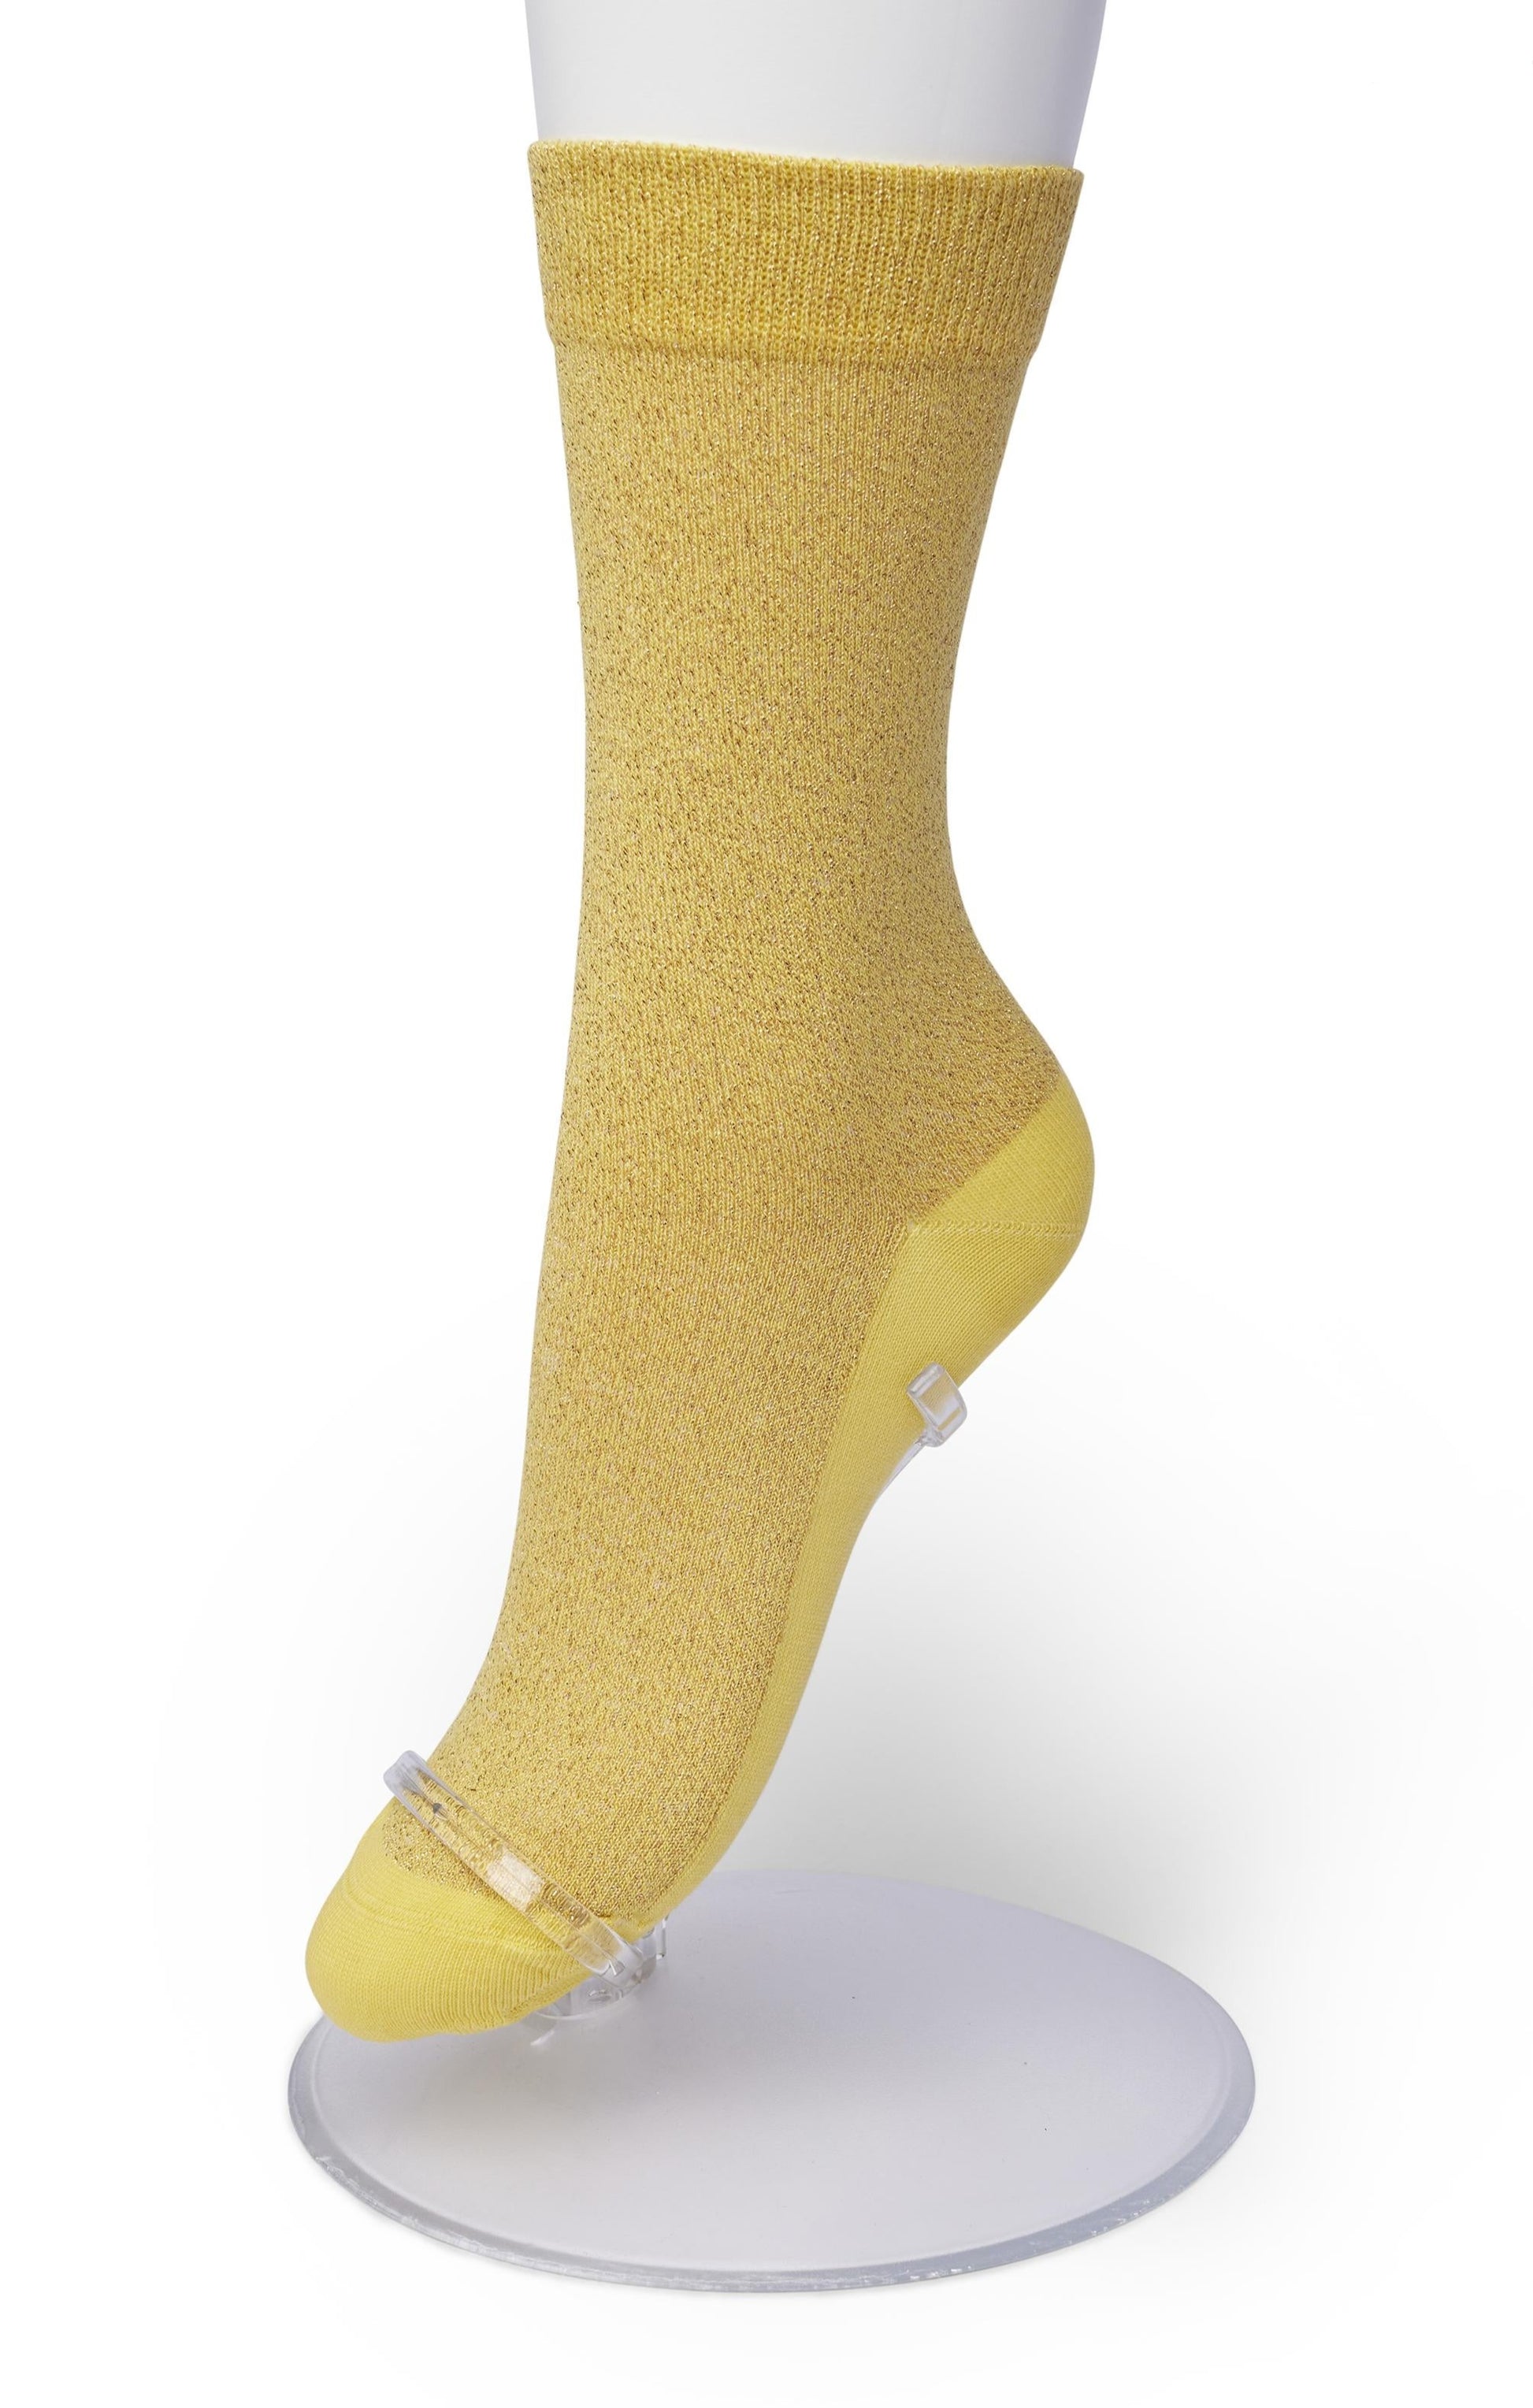 Bonnie Doon BP051138 Cotton Sparkle Socks - yellow socks with gold sparkly glitter lam̩ lurex